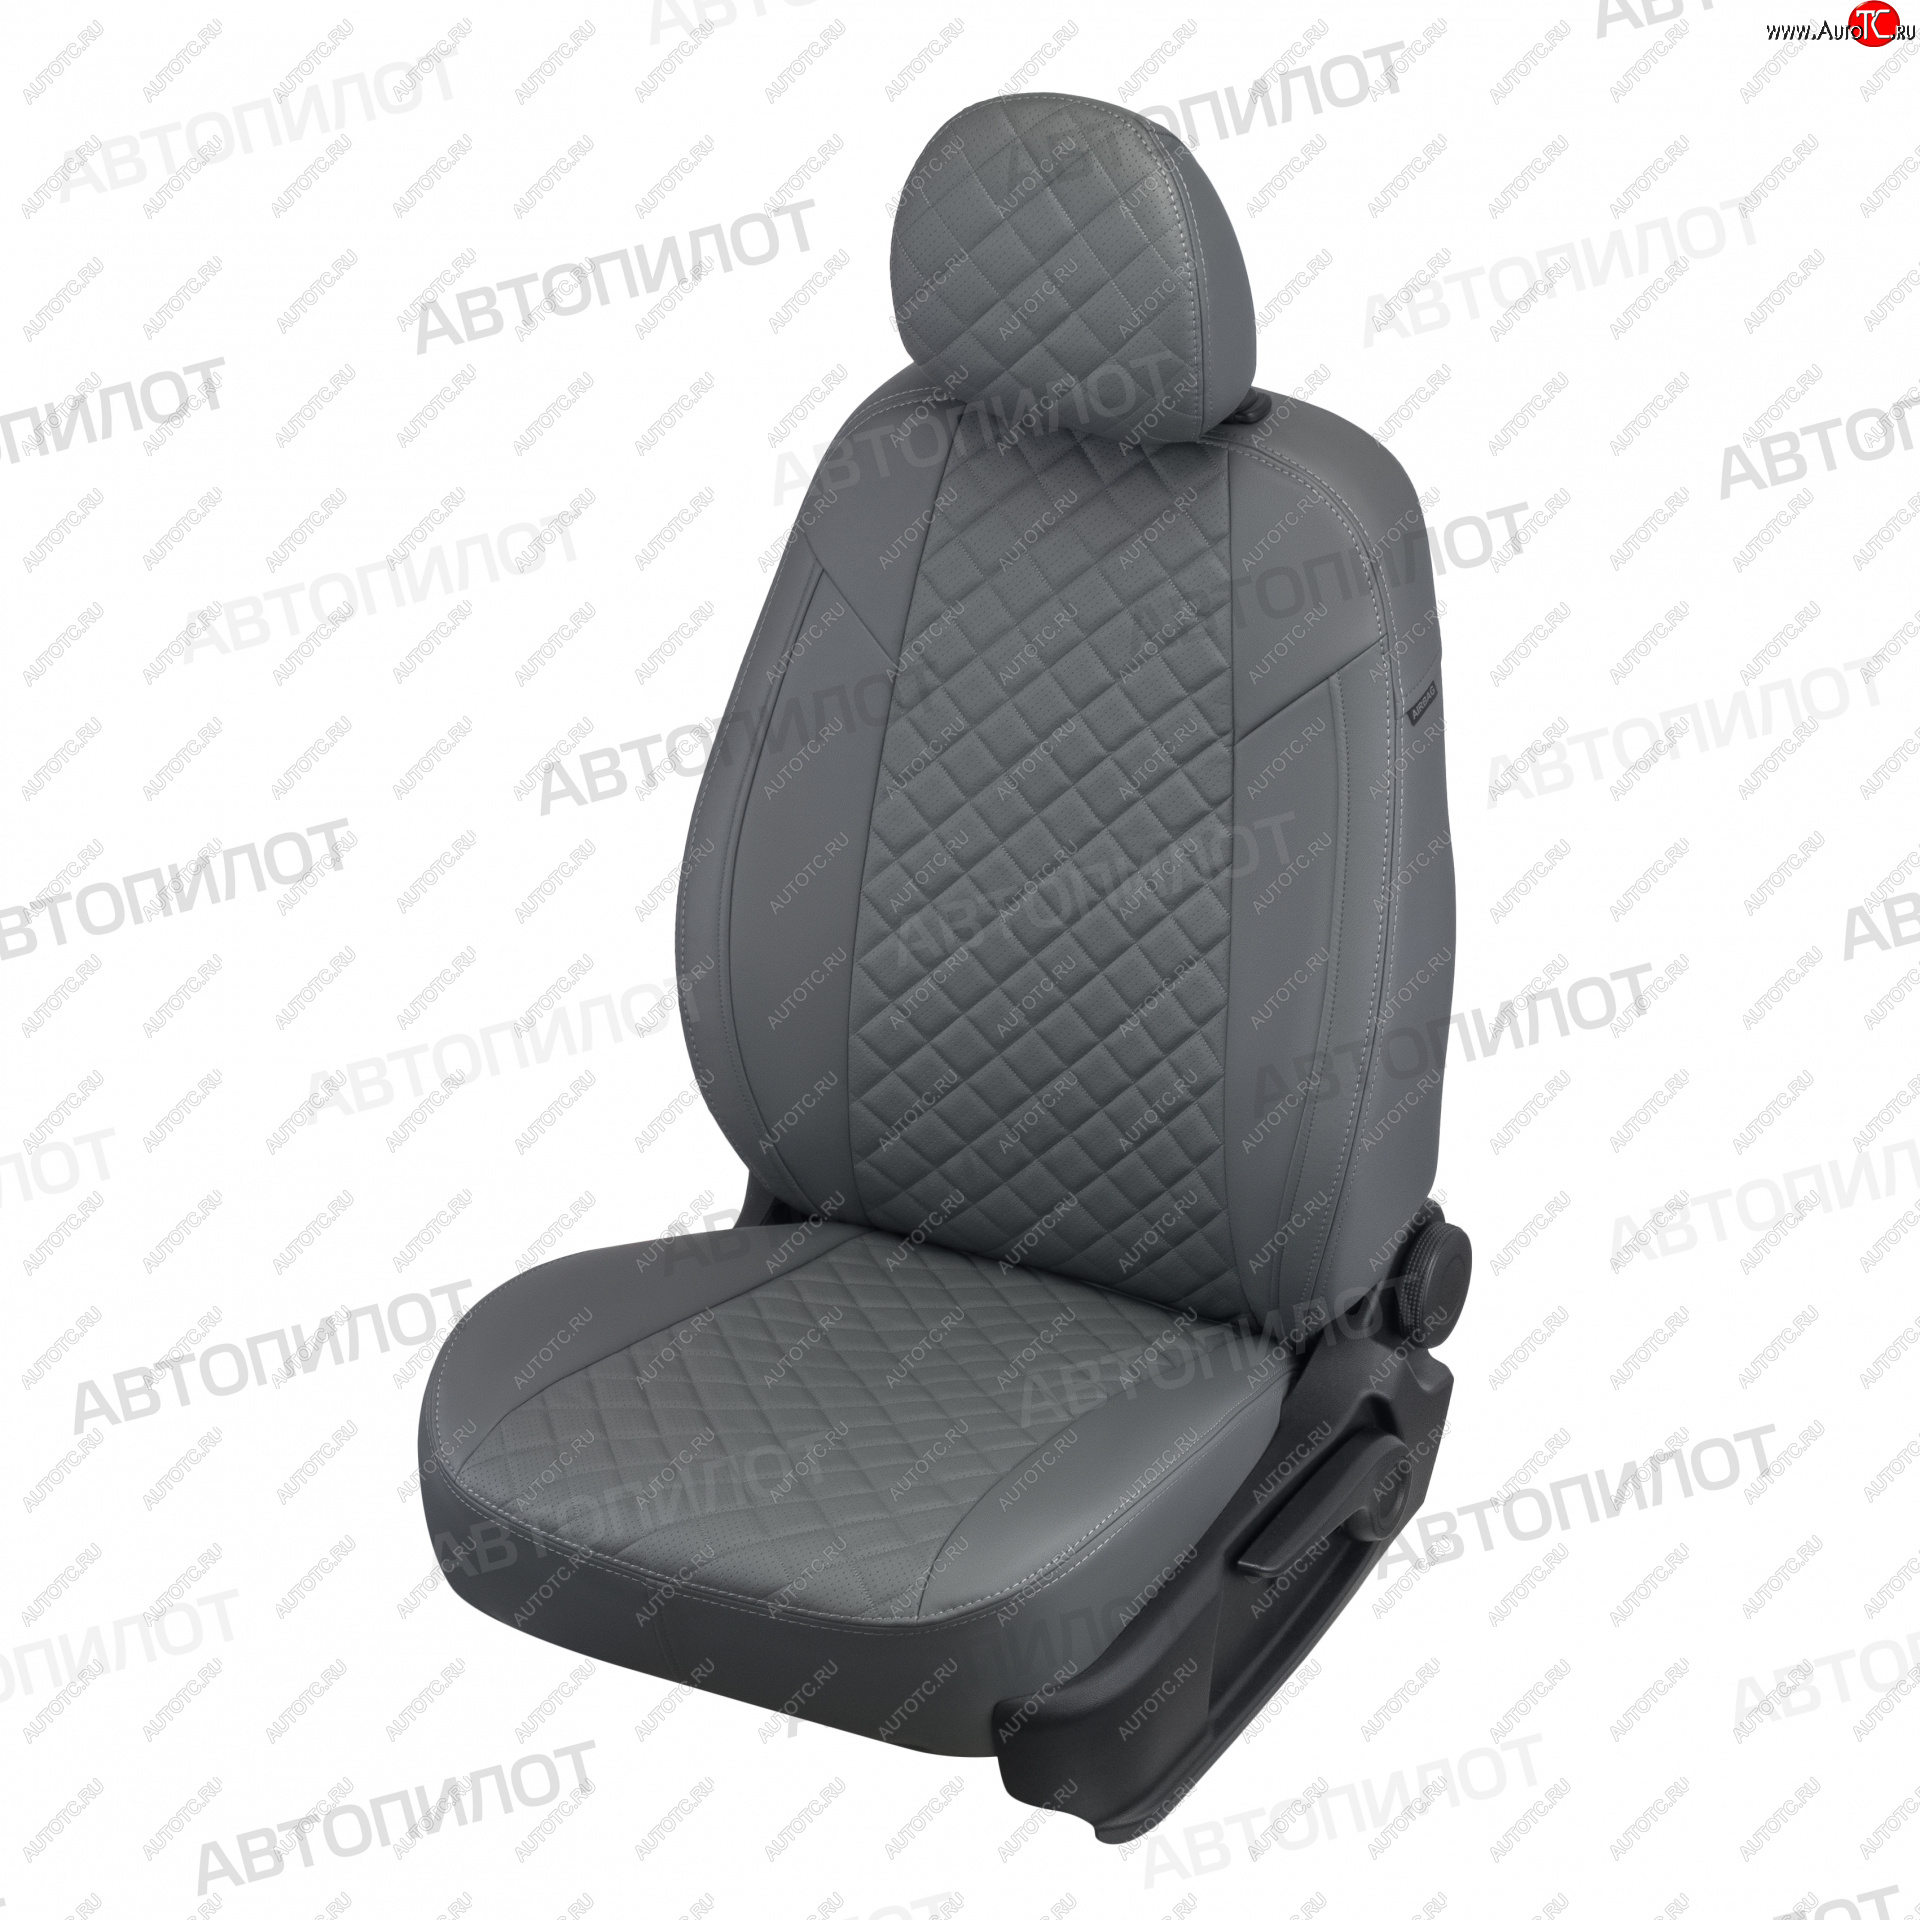 13 999 р. Чехлы сидений (экокожа, S-Line) Автопилот Ромб  Audi Q5  8R (2008-2017) (серый)